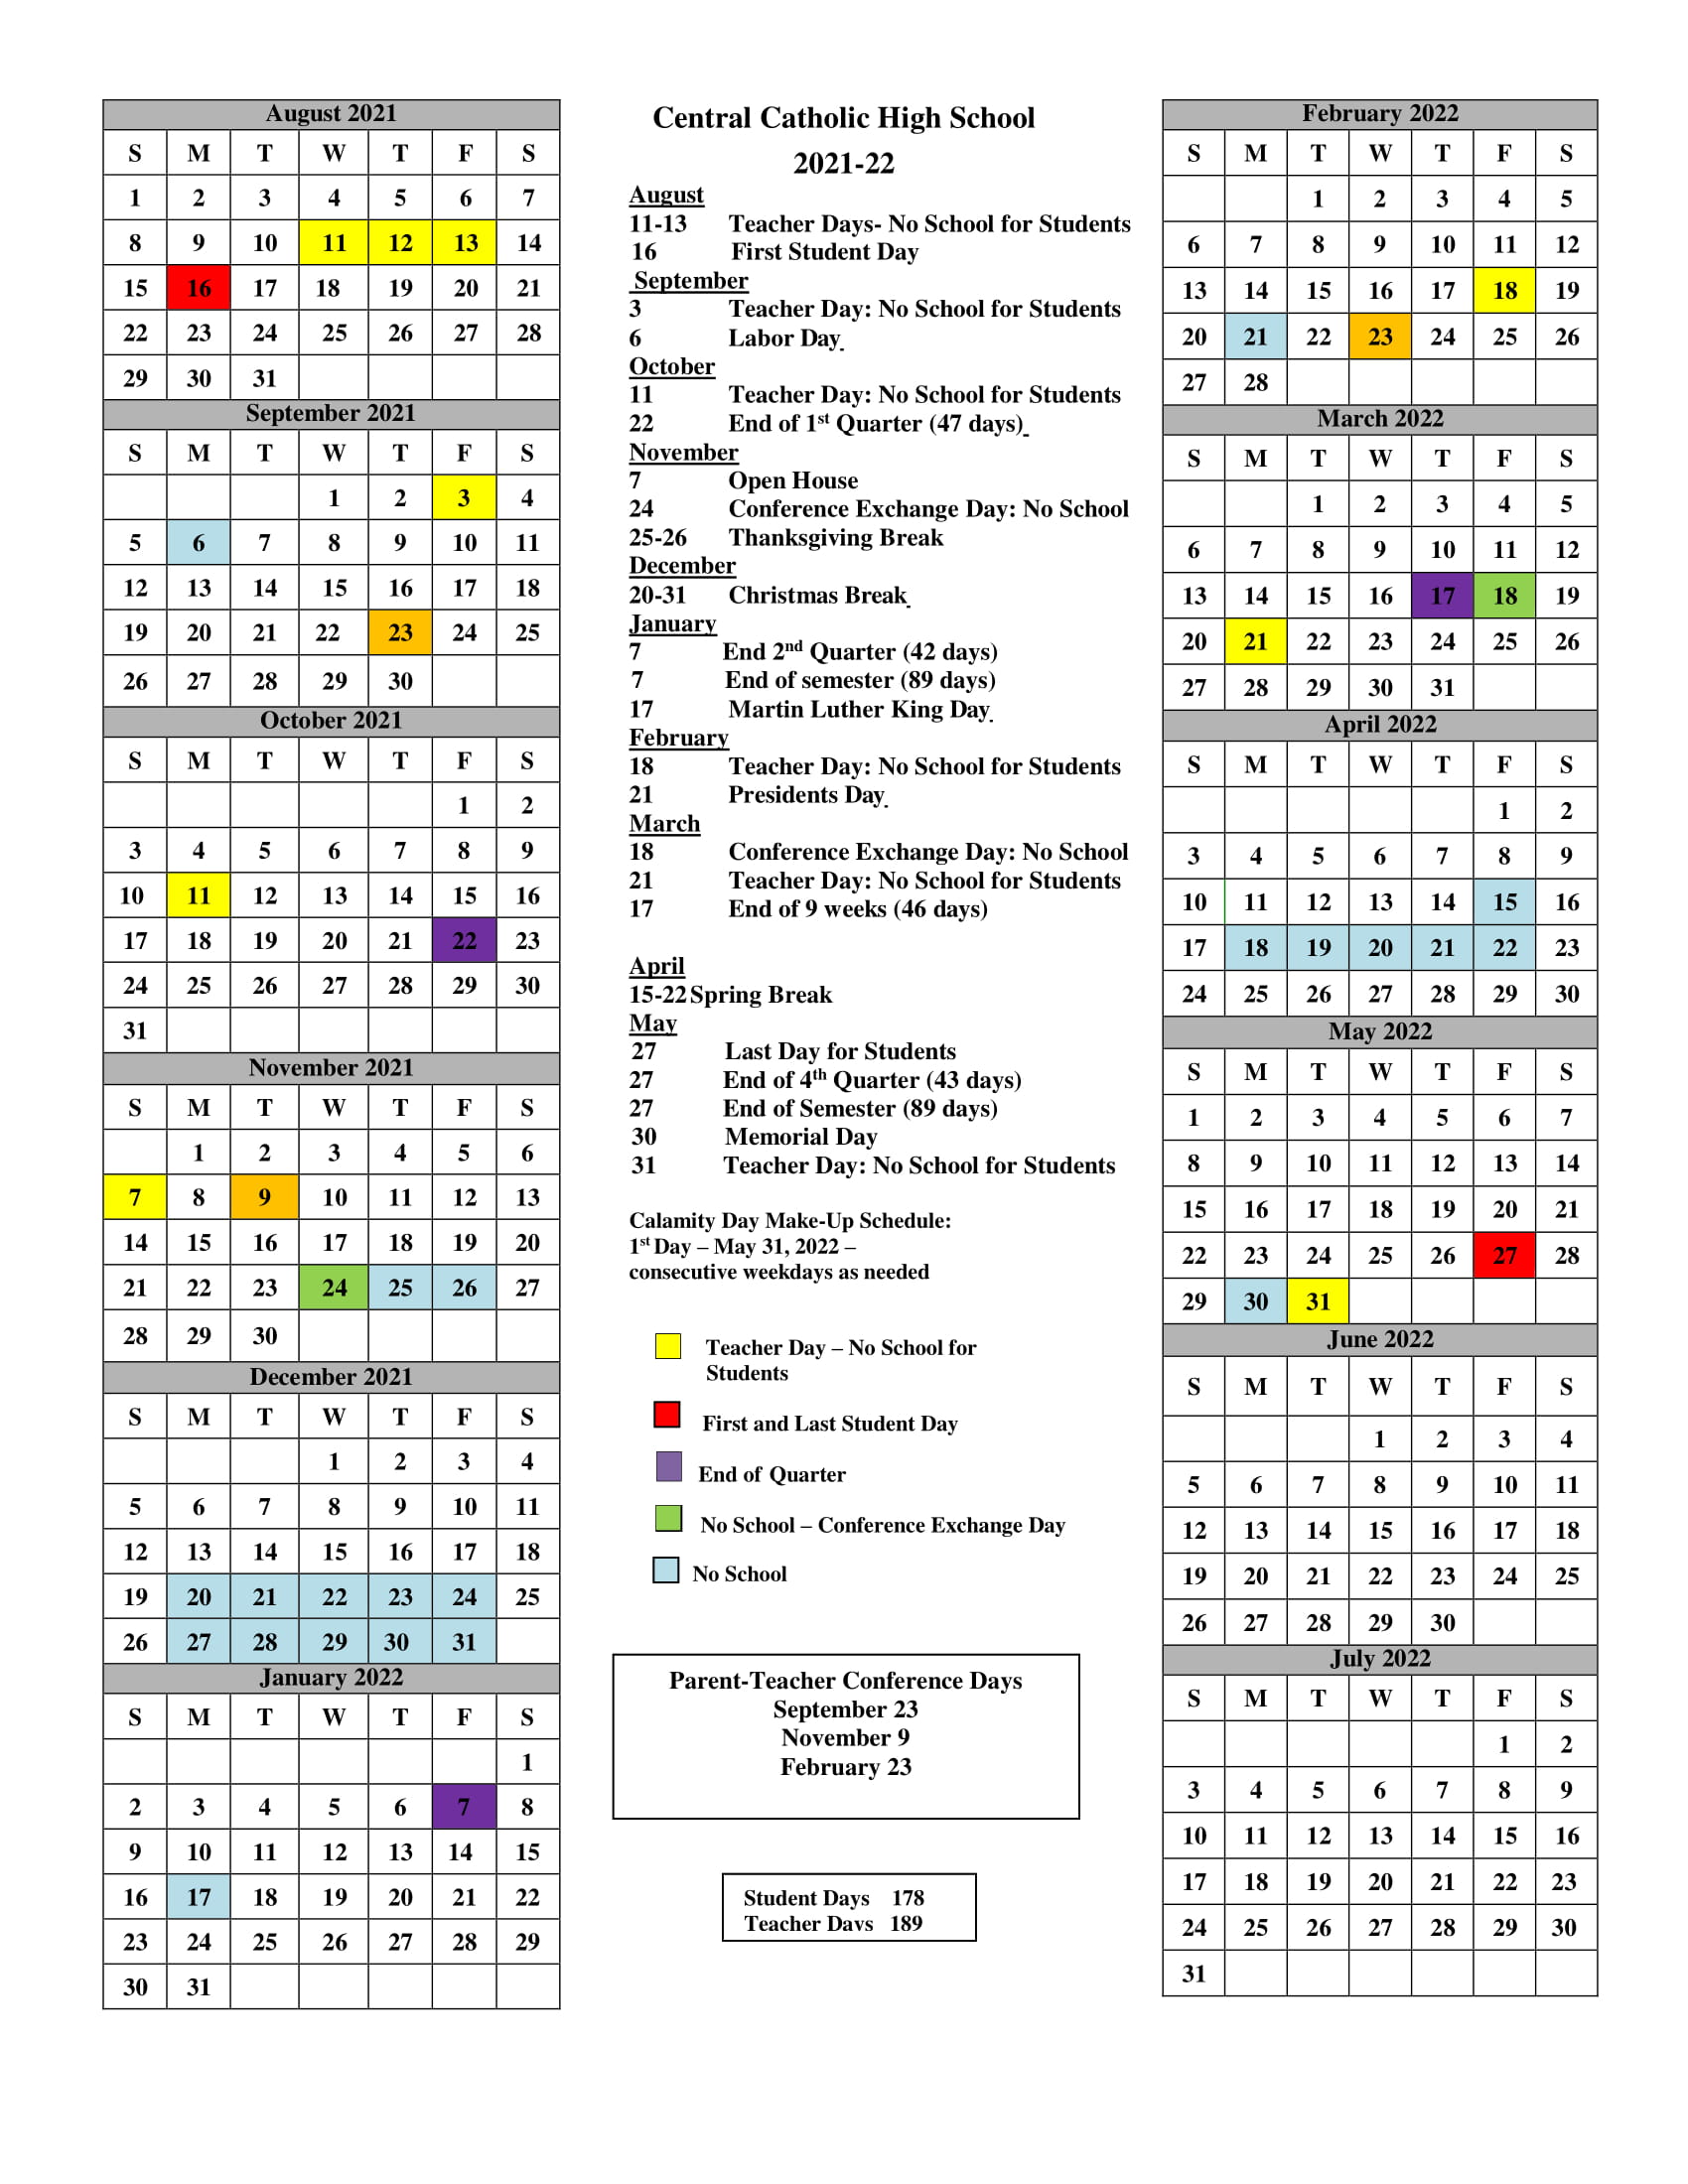 Ohio University Academic Calendar 2022 23 Academic Calendar 2021-2022